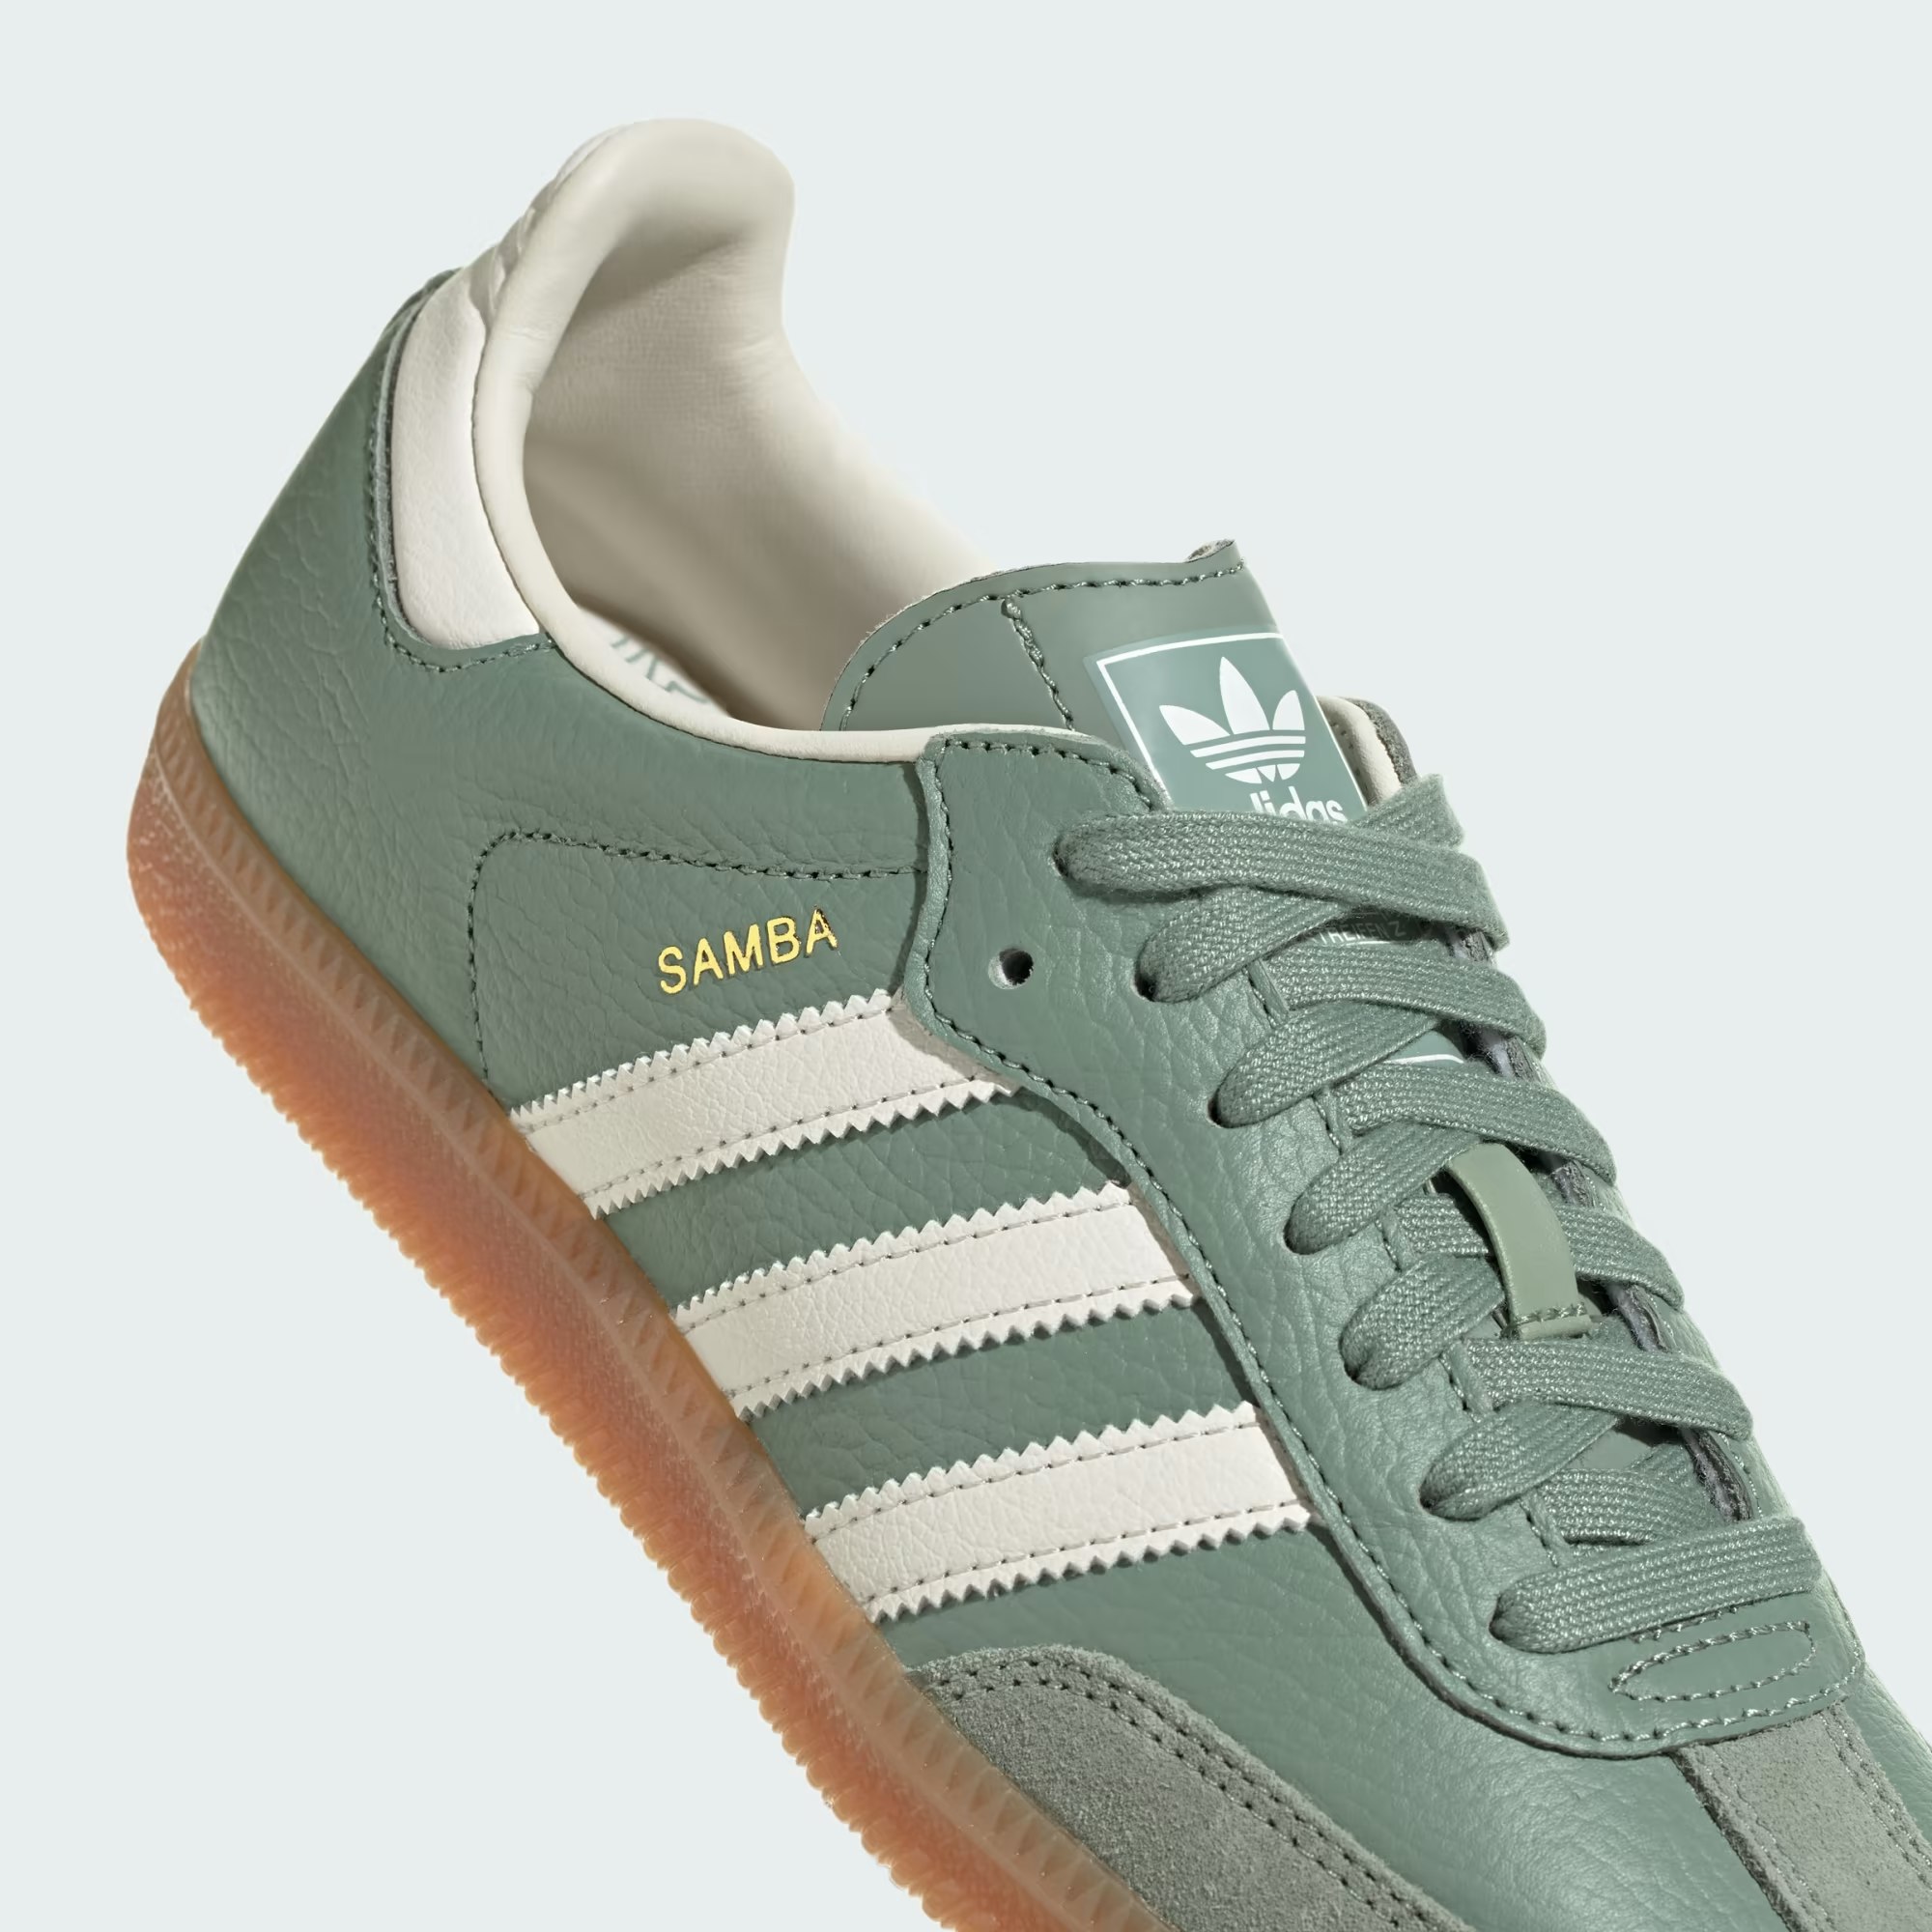 adidas Samba OG "Silver Green"